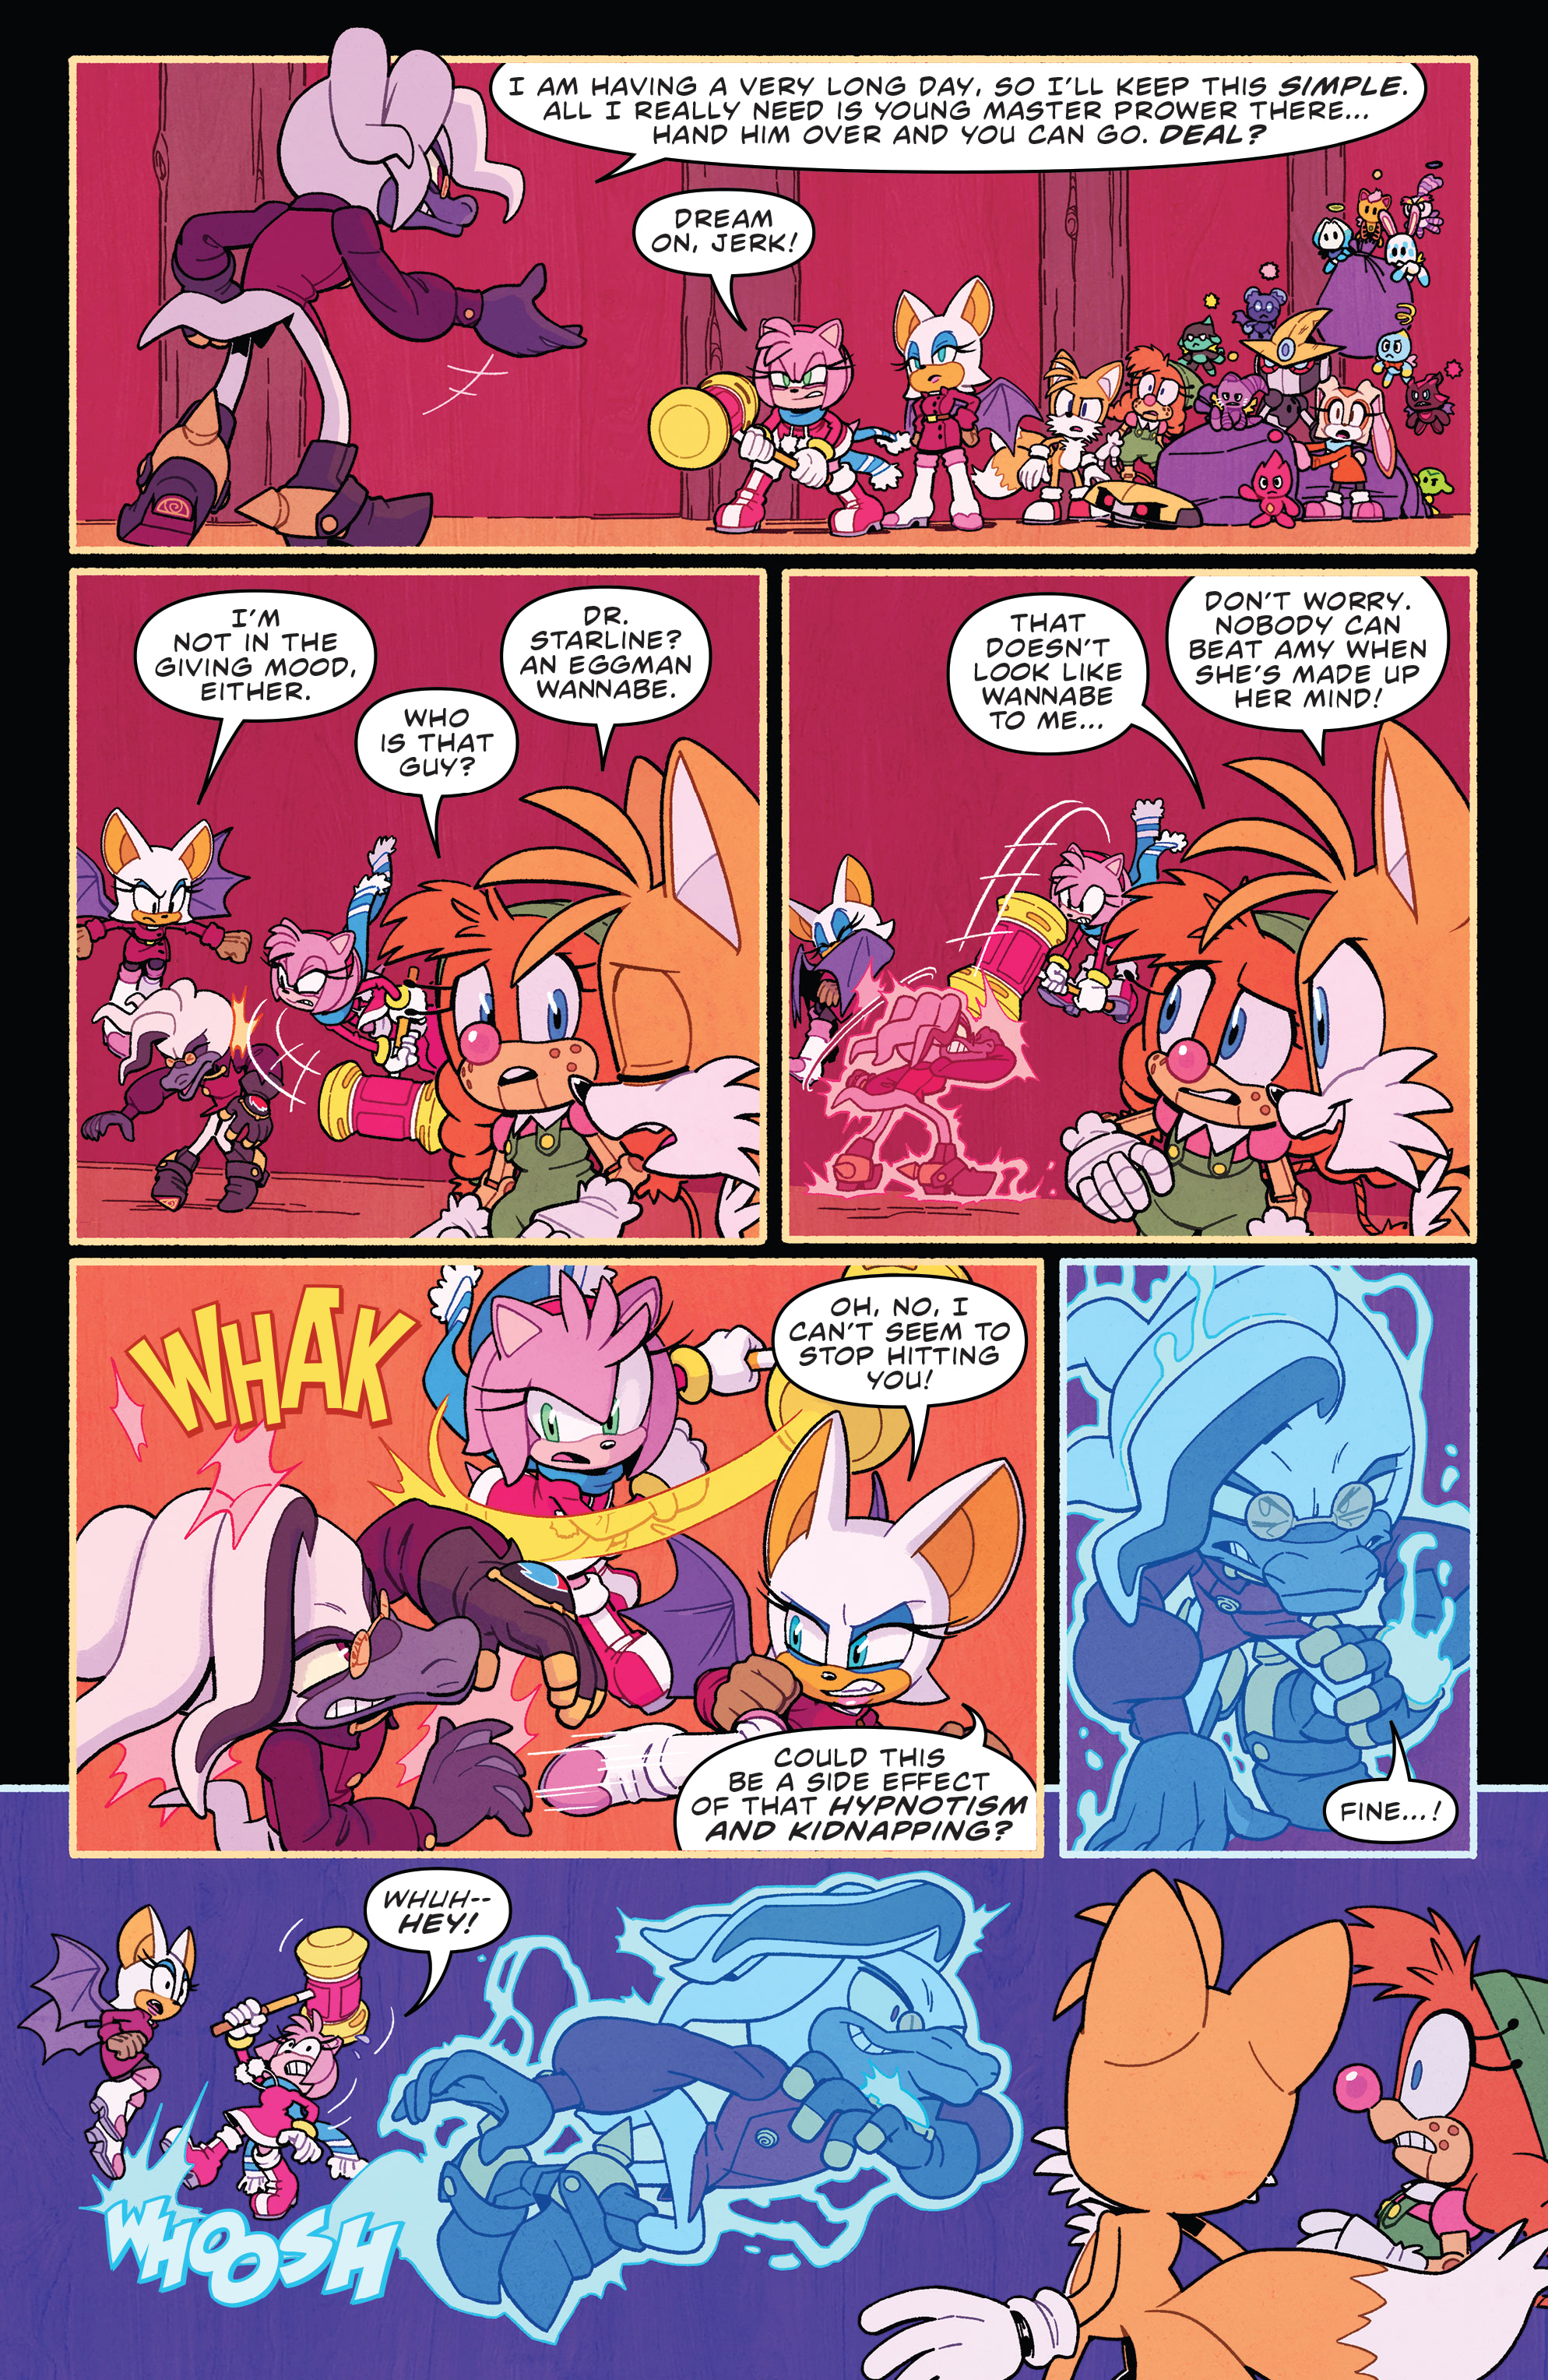 Super Comics: Sonic the Hedgehog (IDW) – #36 – The Reviewers Unite